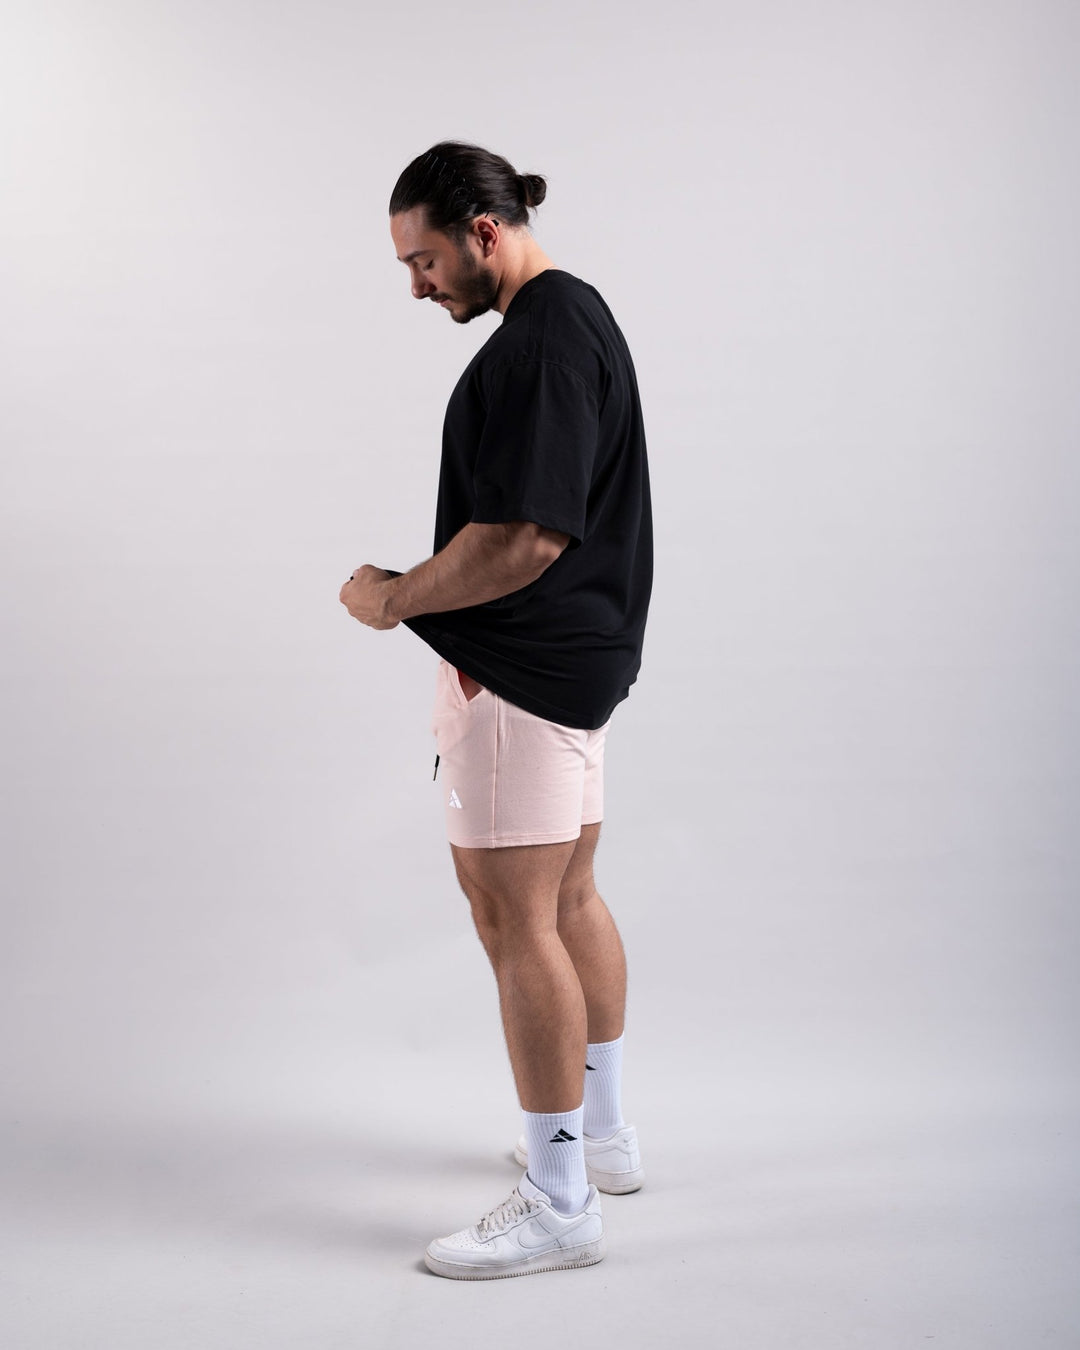 Classic Shorts 2.0 (Peach) - Athletic Aesthetics